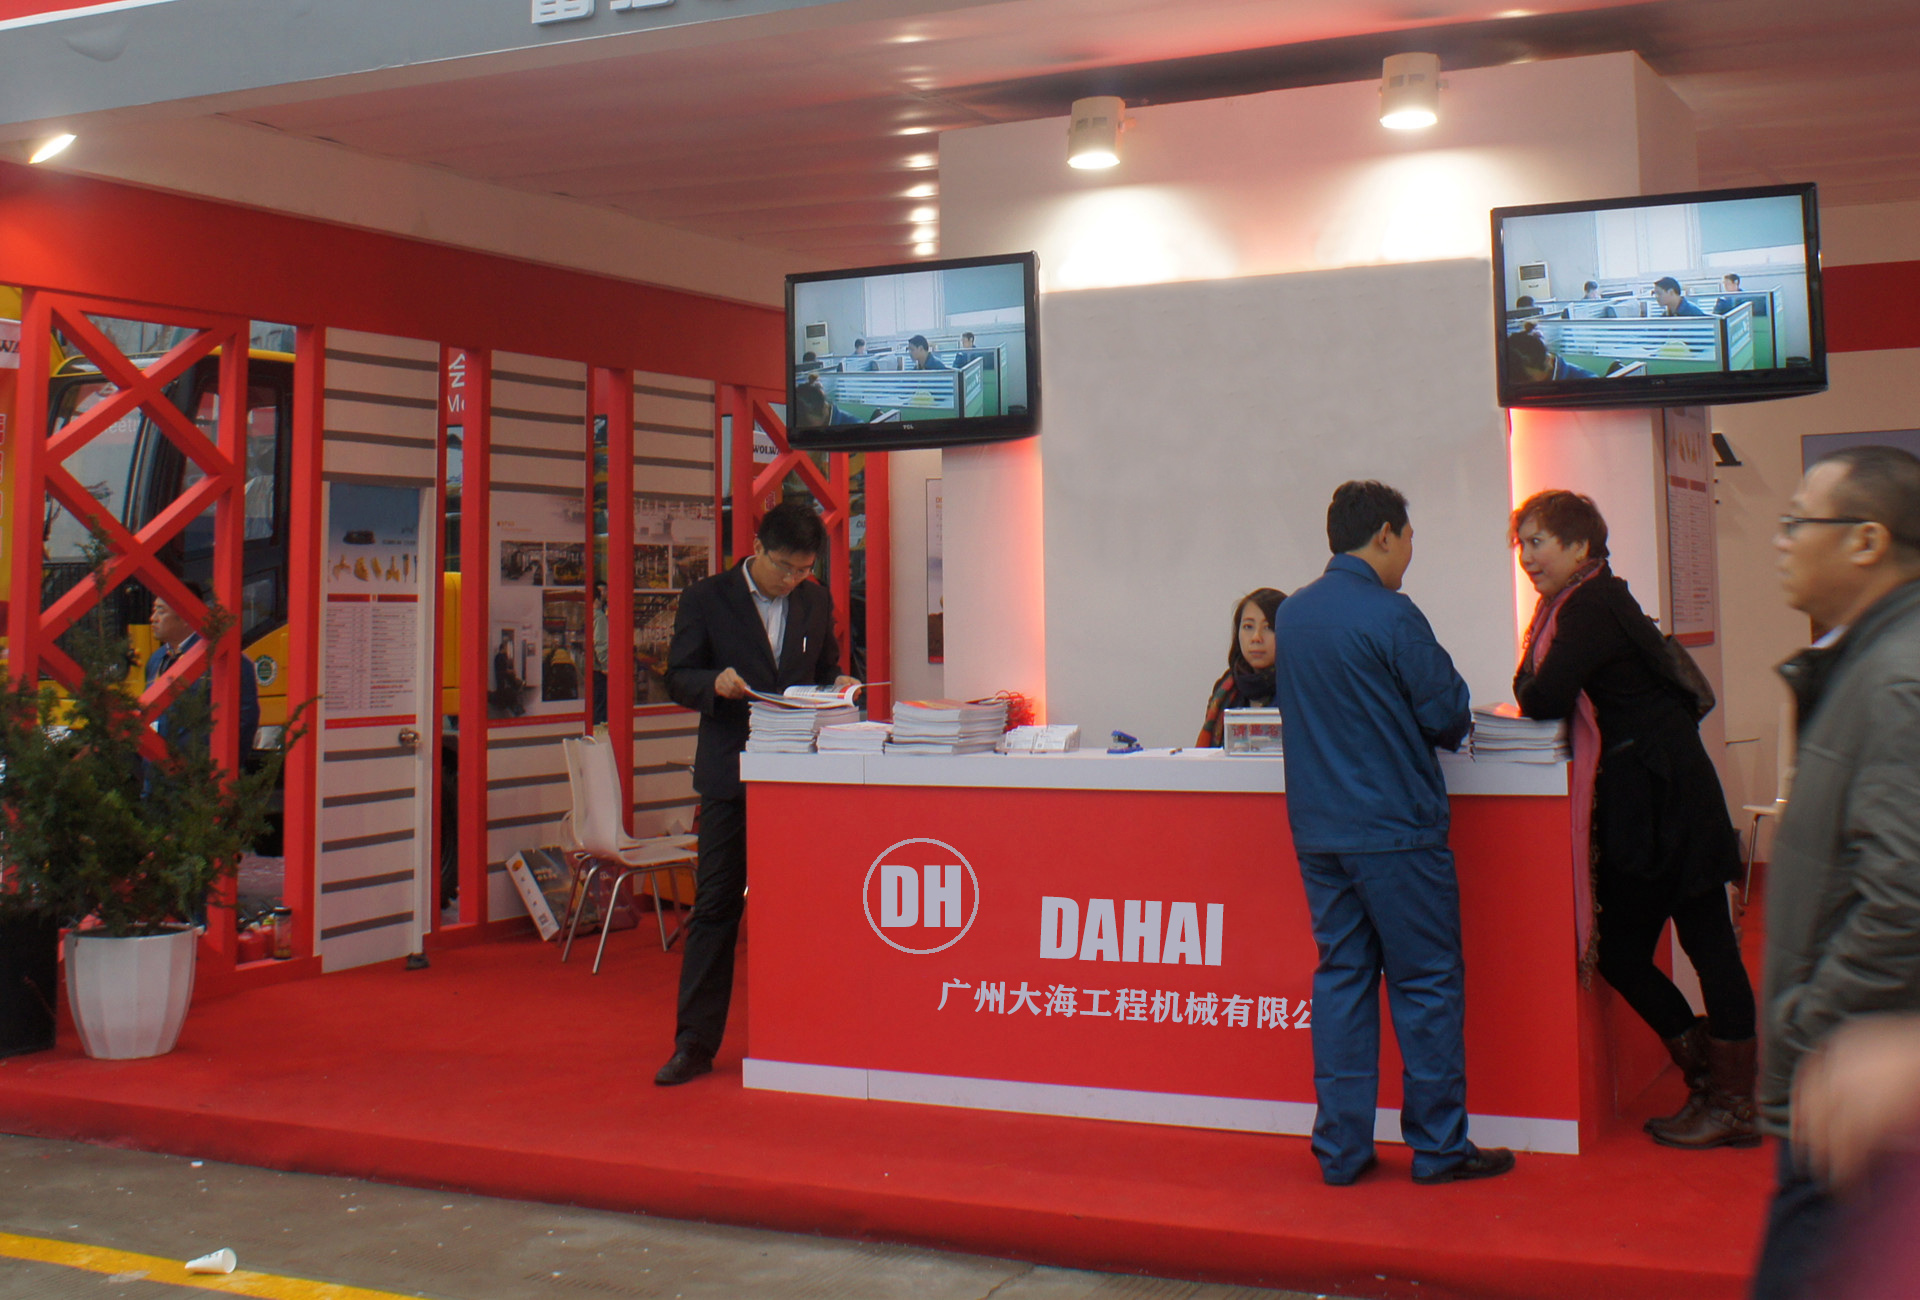 Dahai is participating in Bauma exhibition 2018 in Shanghai, China